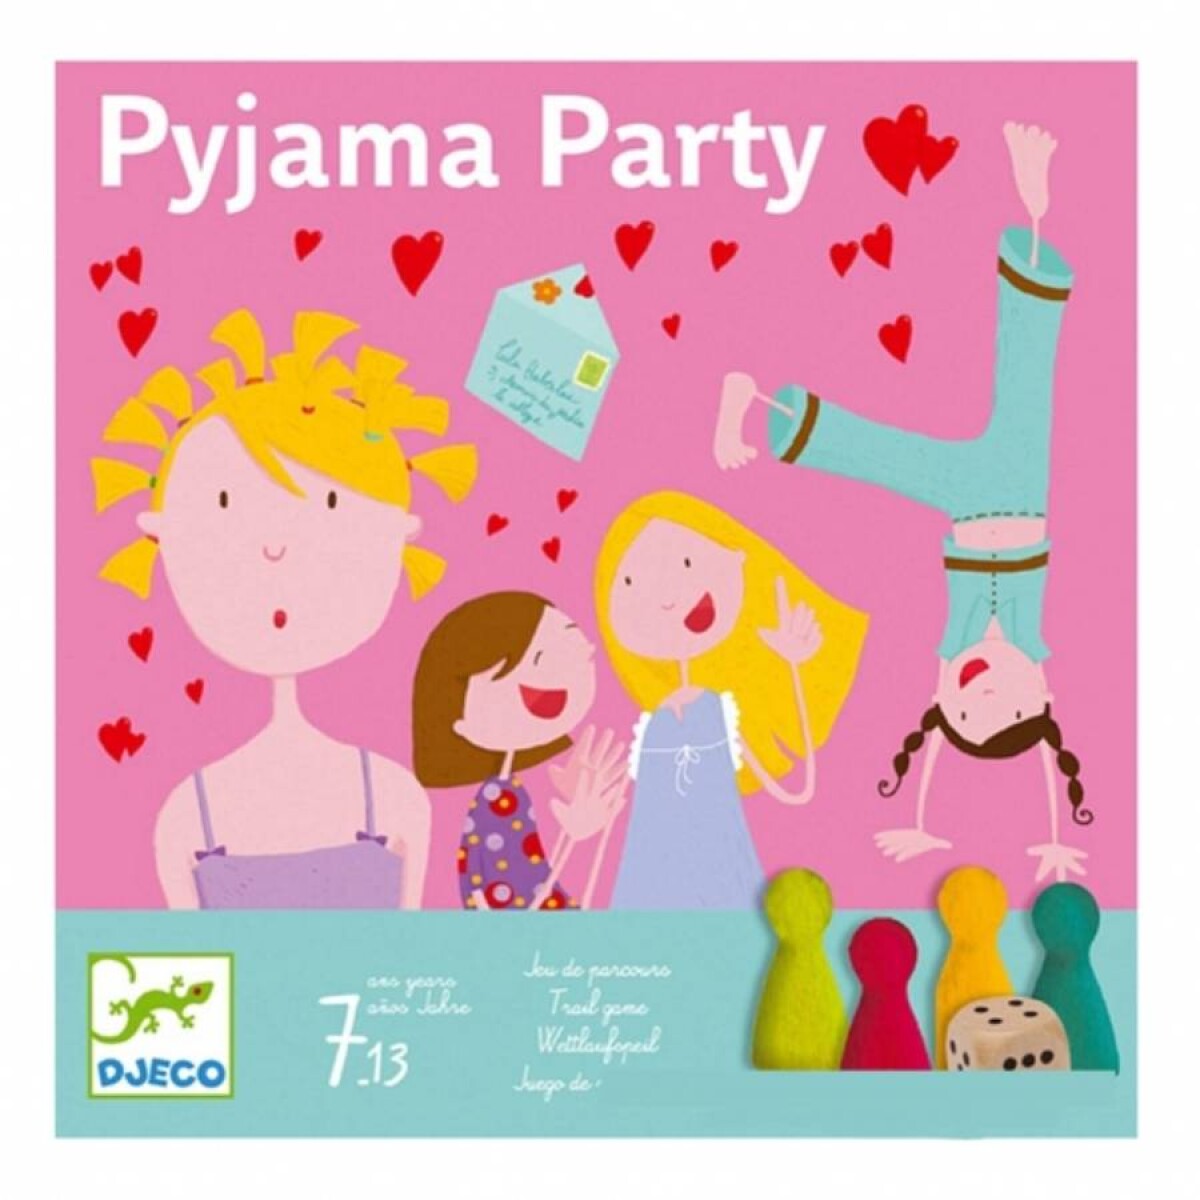 Pijama Party by Djeco 